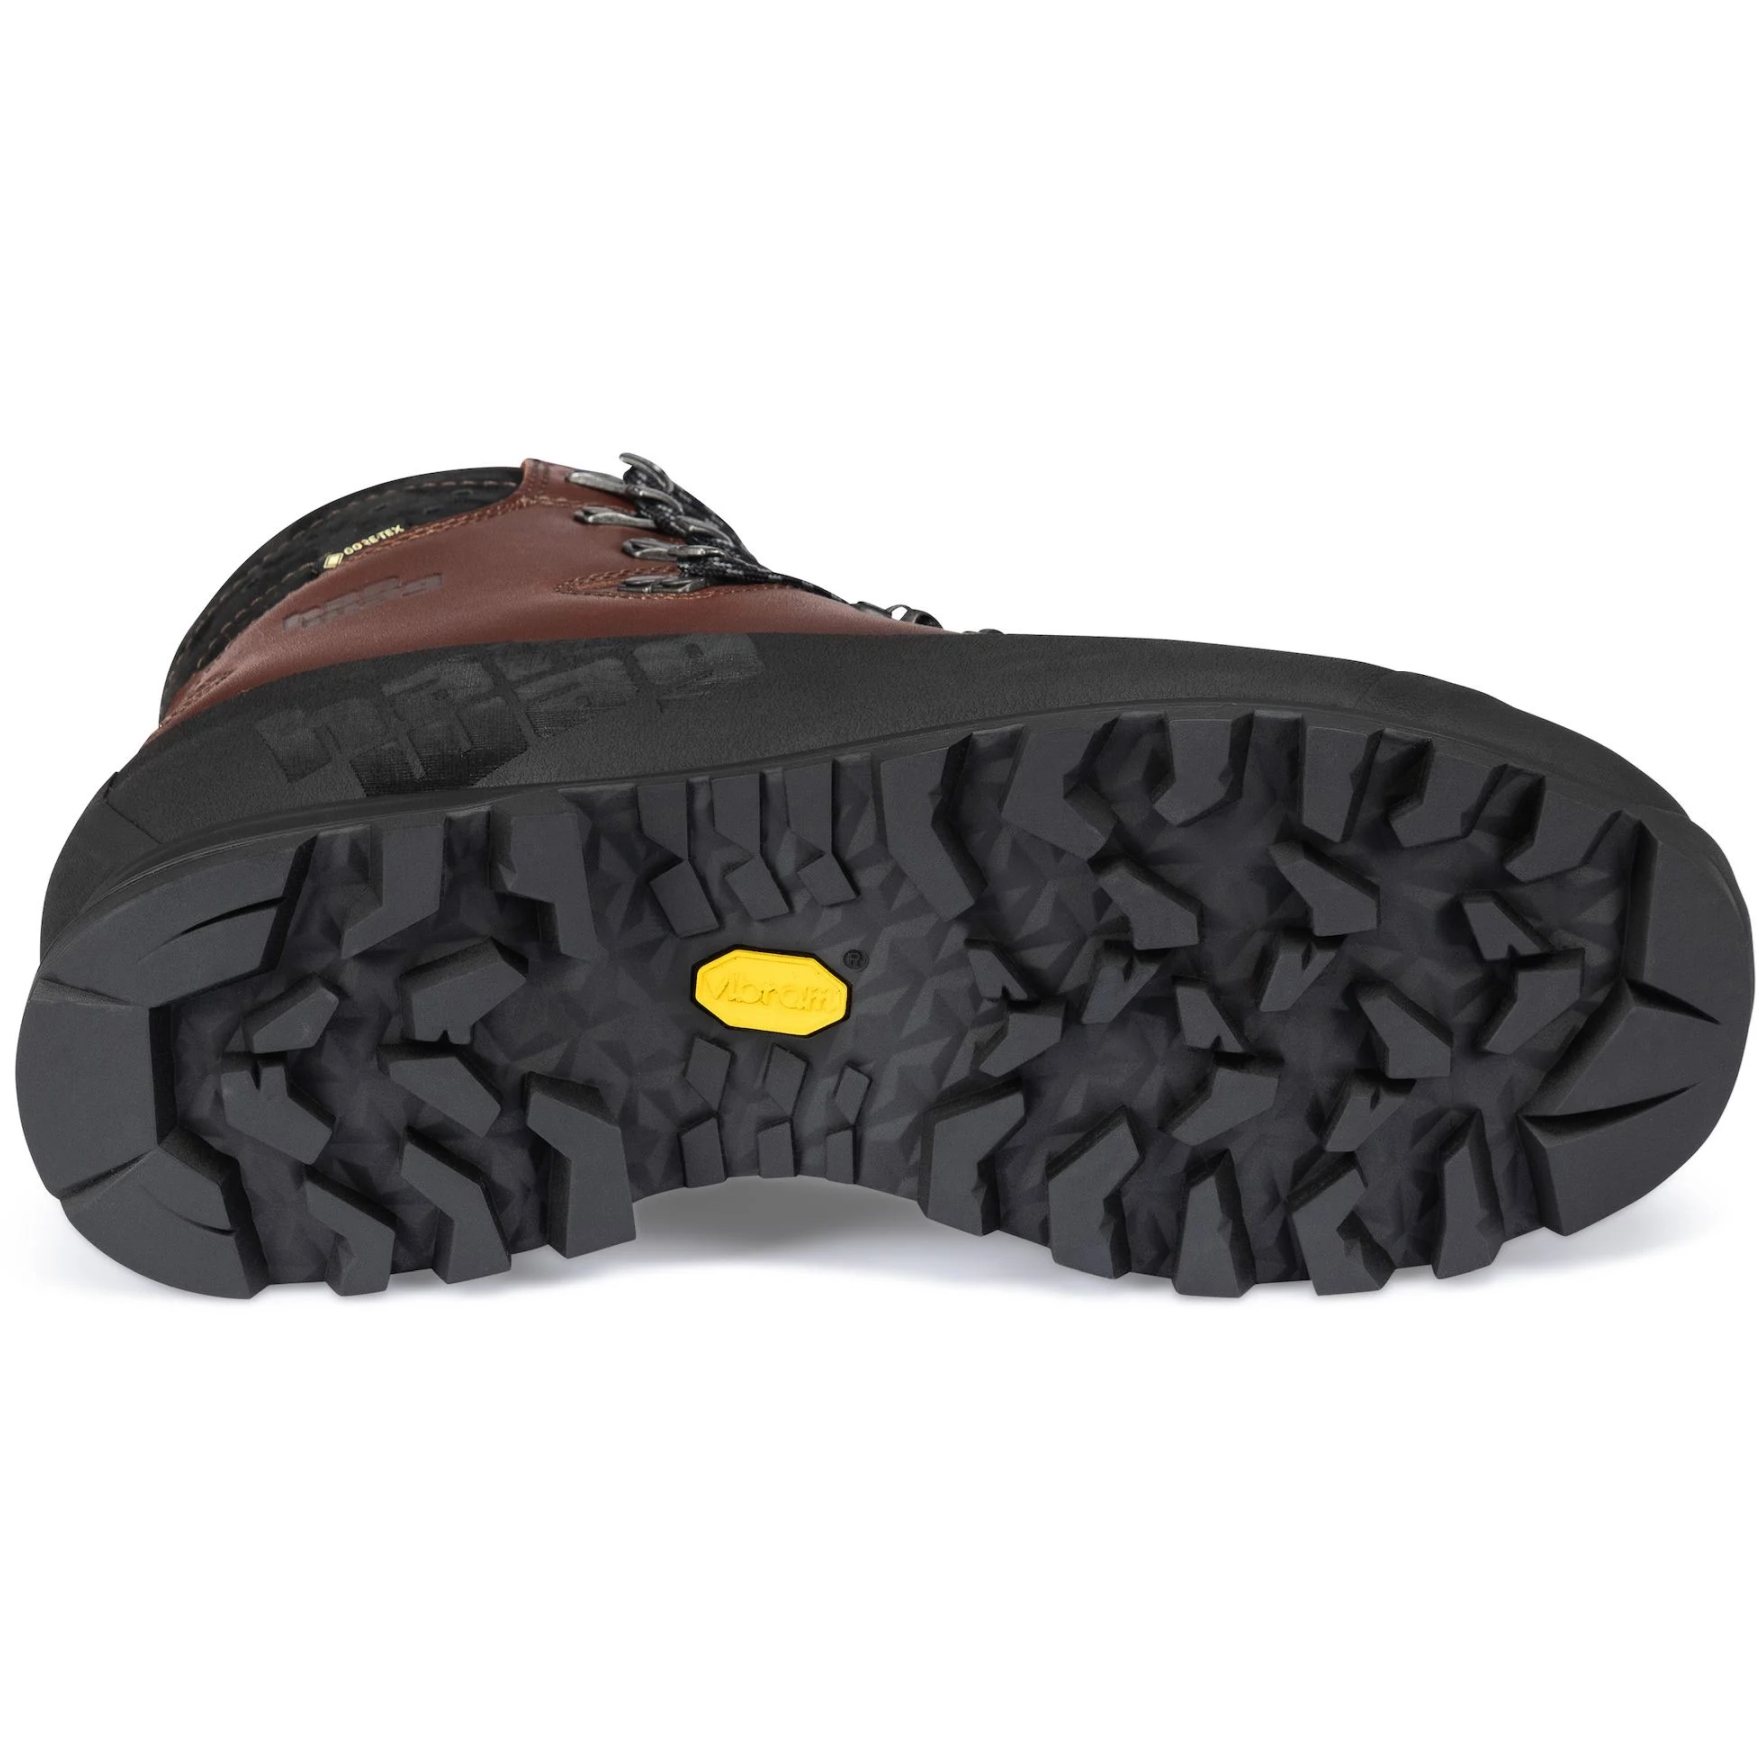 Hanwag Alaska Pro Wide GTX Shoes - Century/Black | BIKE24